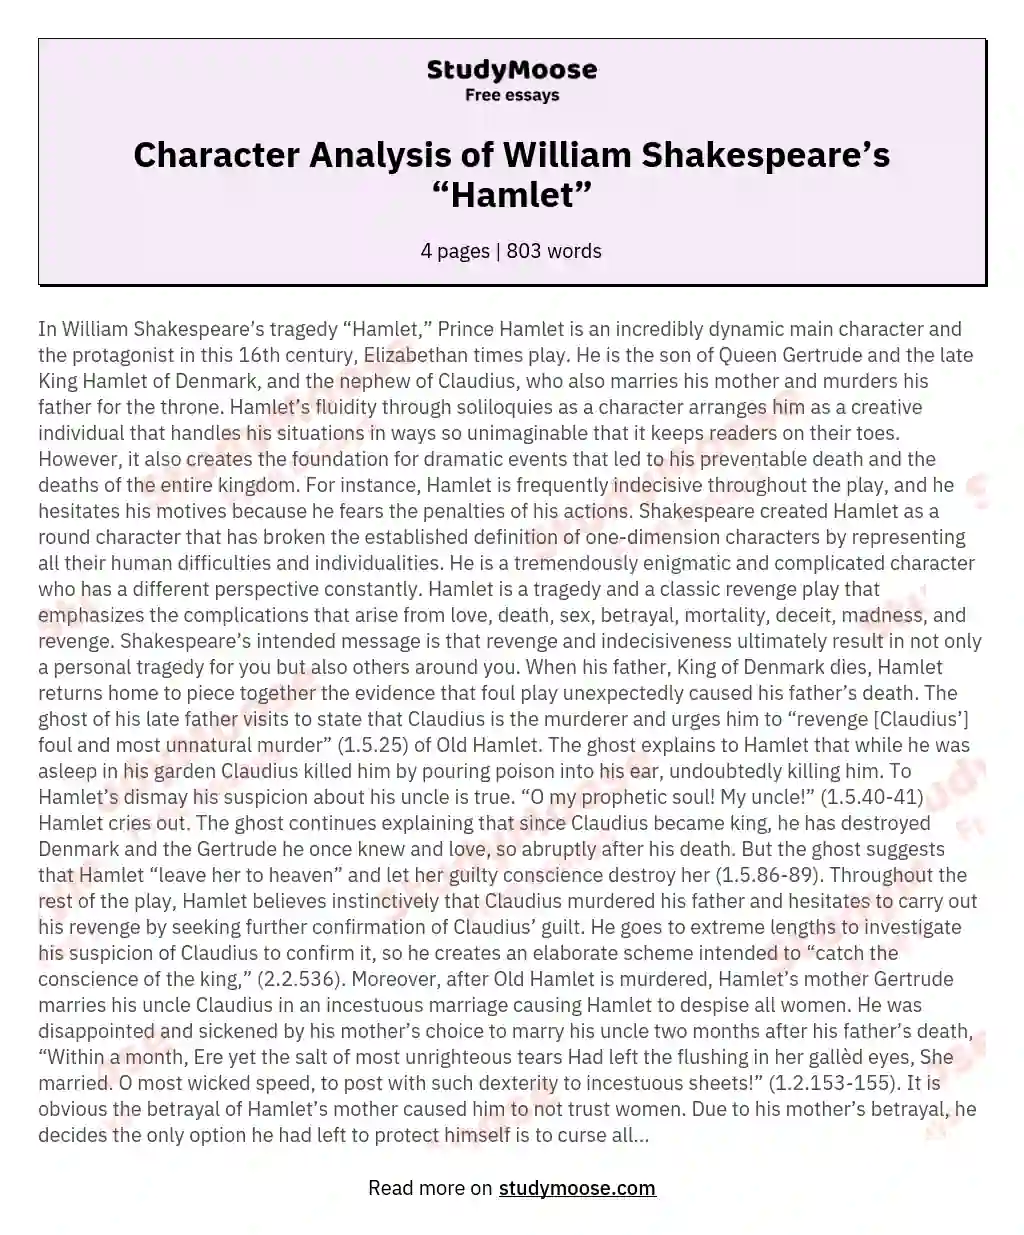 Character Analysis of William Shakespeare’s “Hamlet”